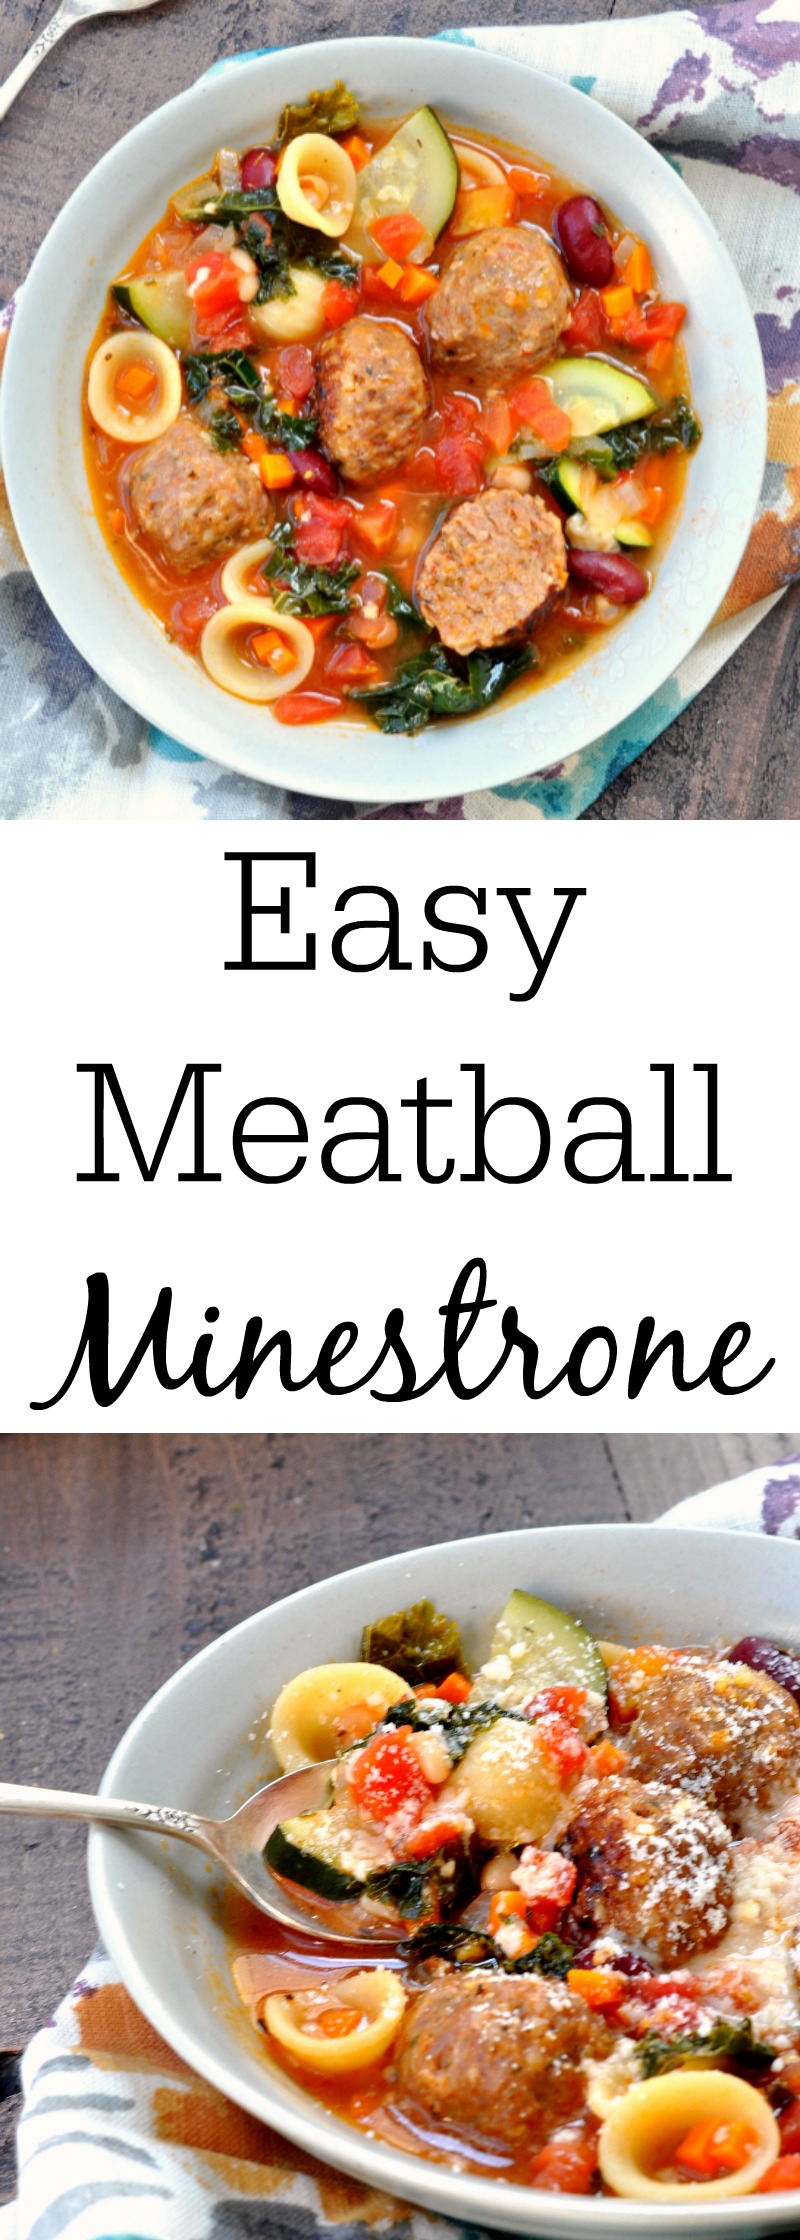 Easy Meatball Minestrone